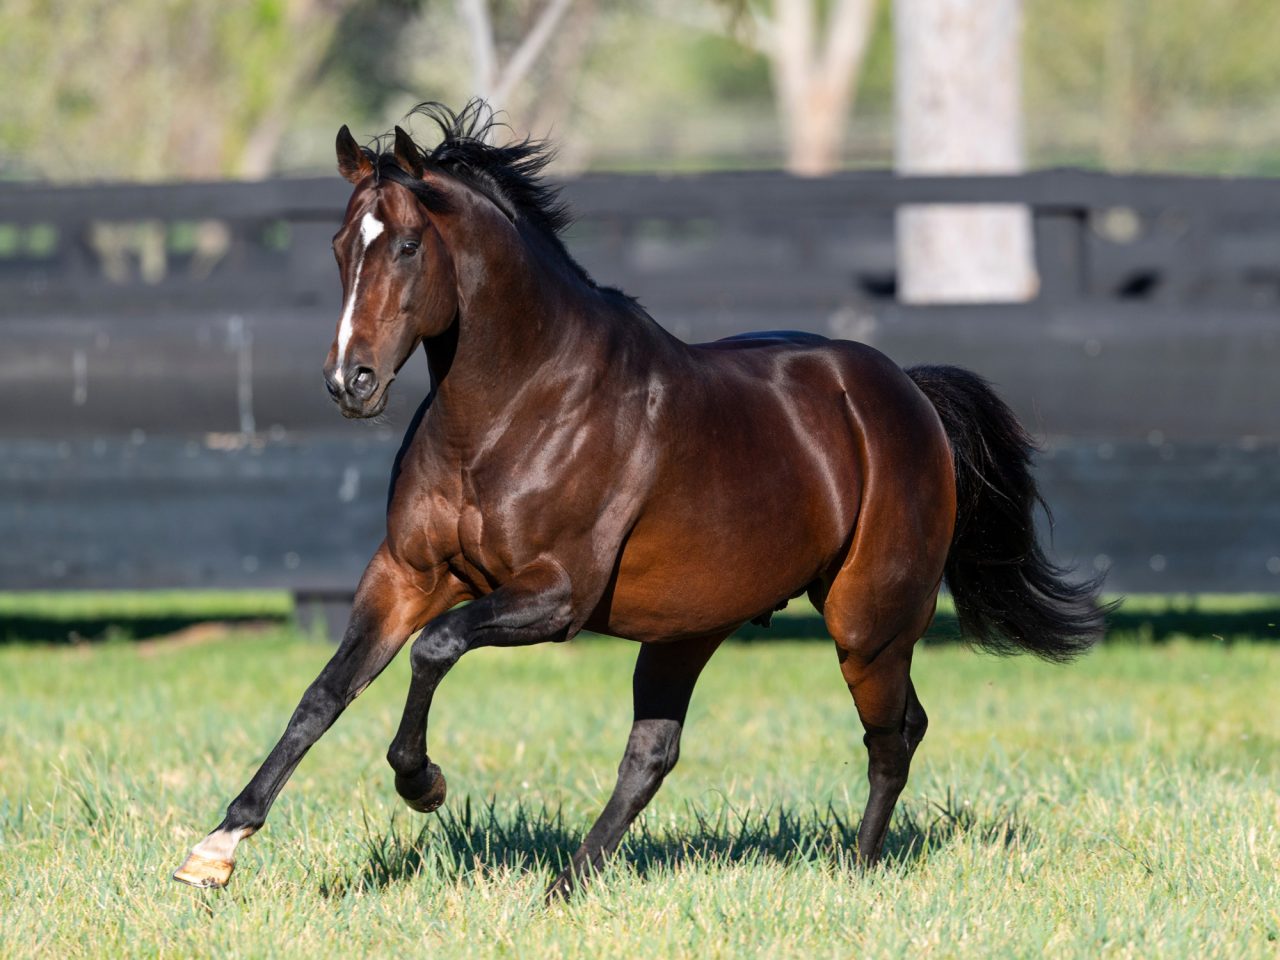 https://www.stallions.com.au/wp-content/uploads/2020/09/Shalaa-Paddock-20190924-7502-2-1280x960.jpg